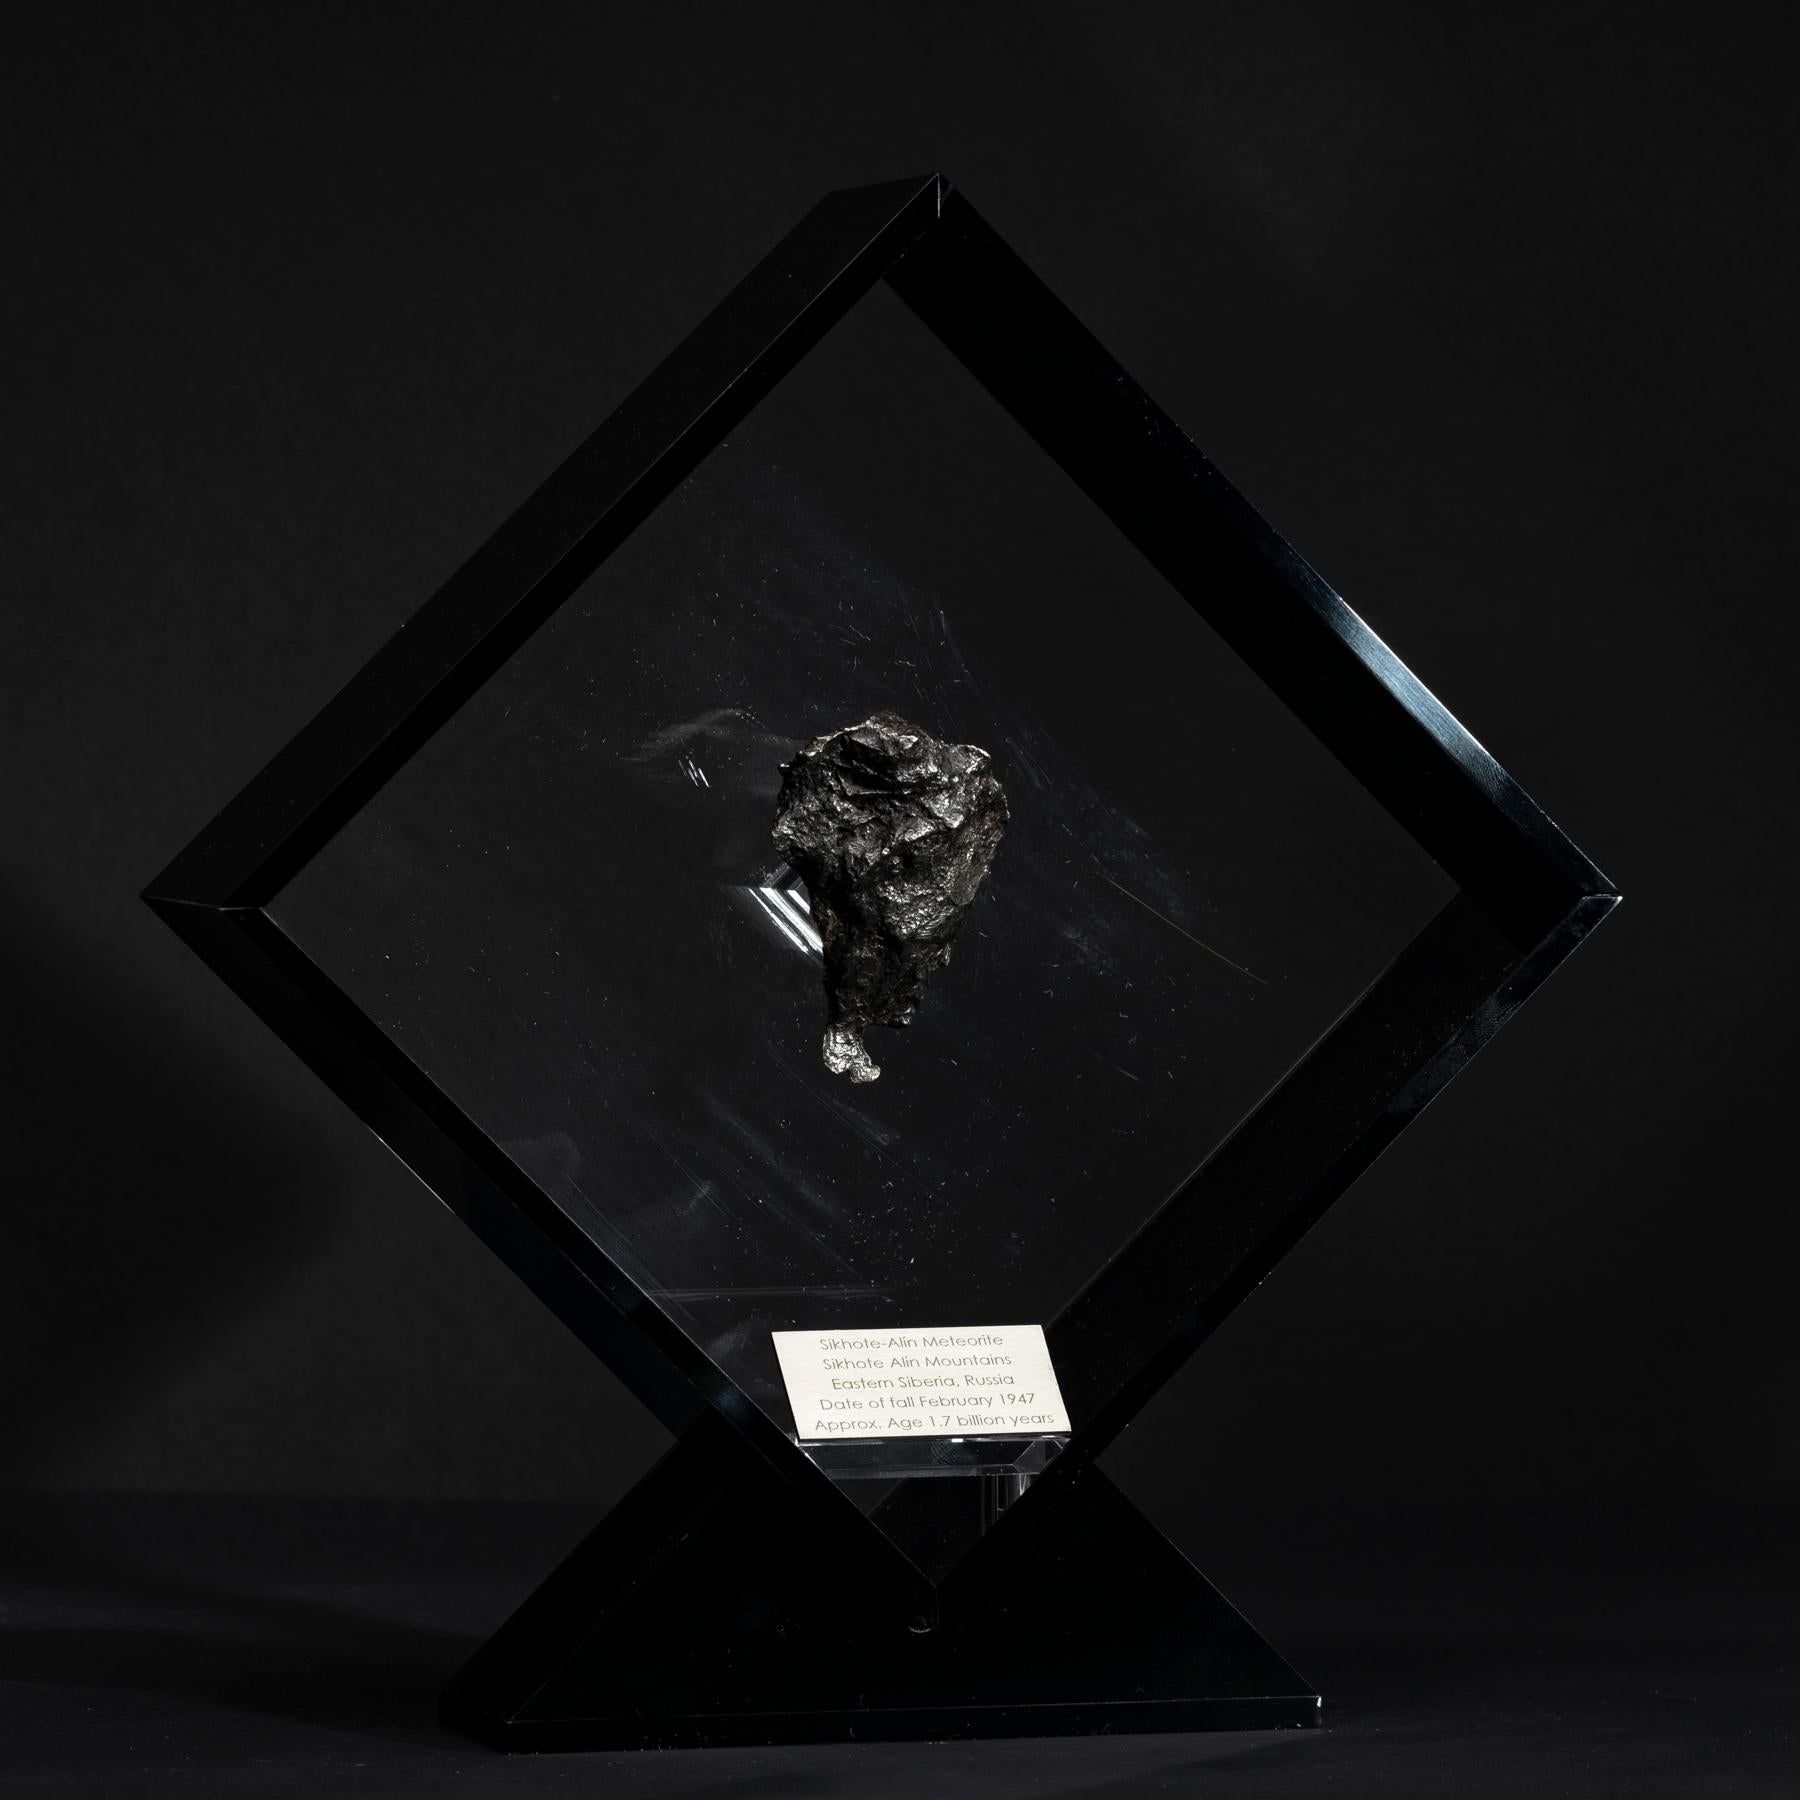 Organic Modern Sikhote Alin Meteorite from Siberia, Russia in a Custom Acrylic Display For Sale